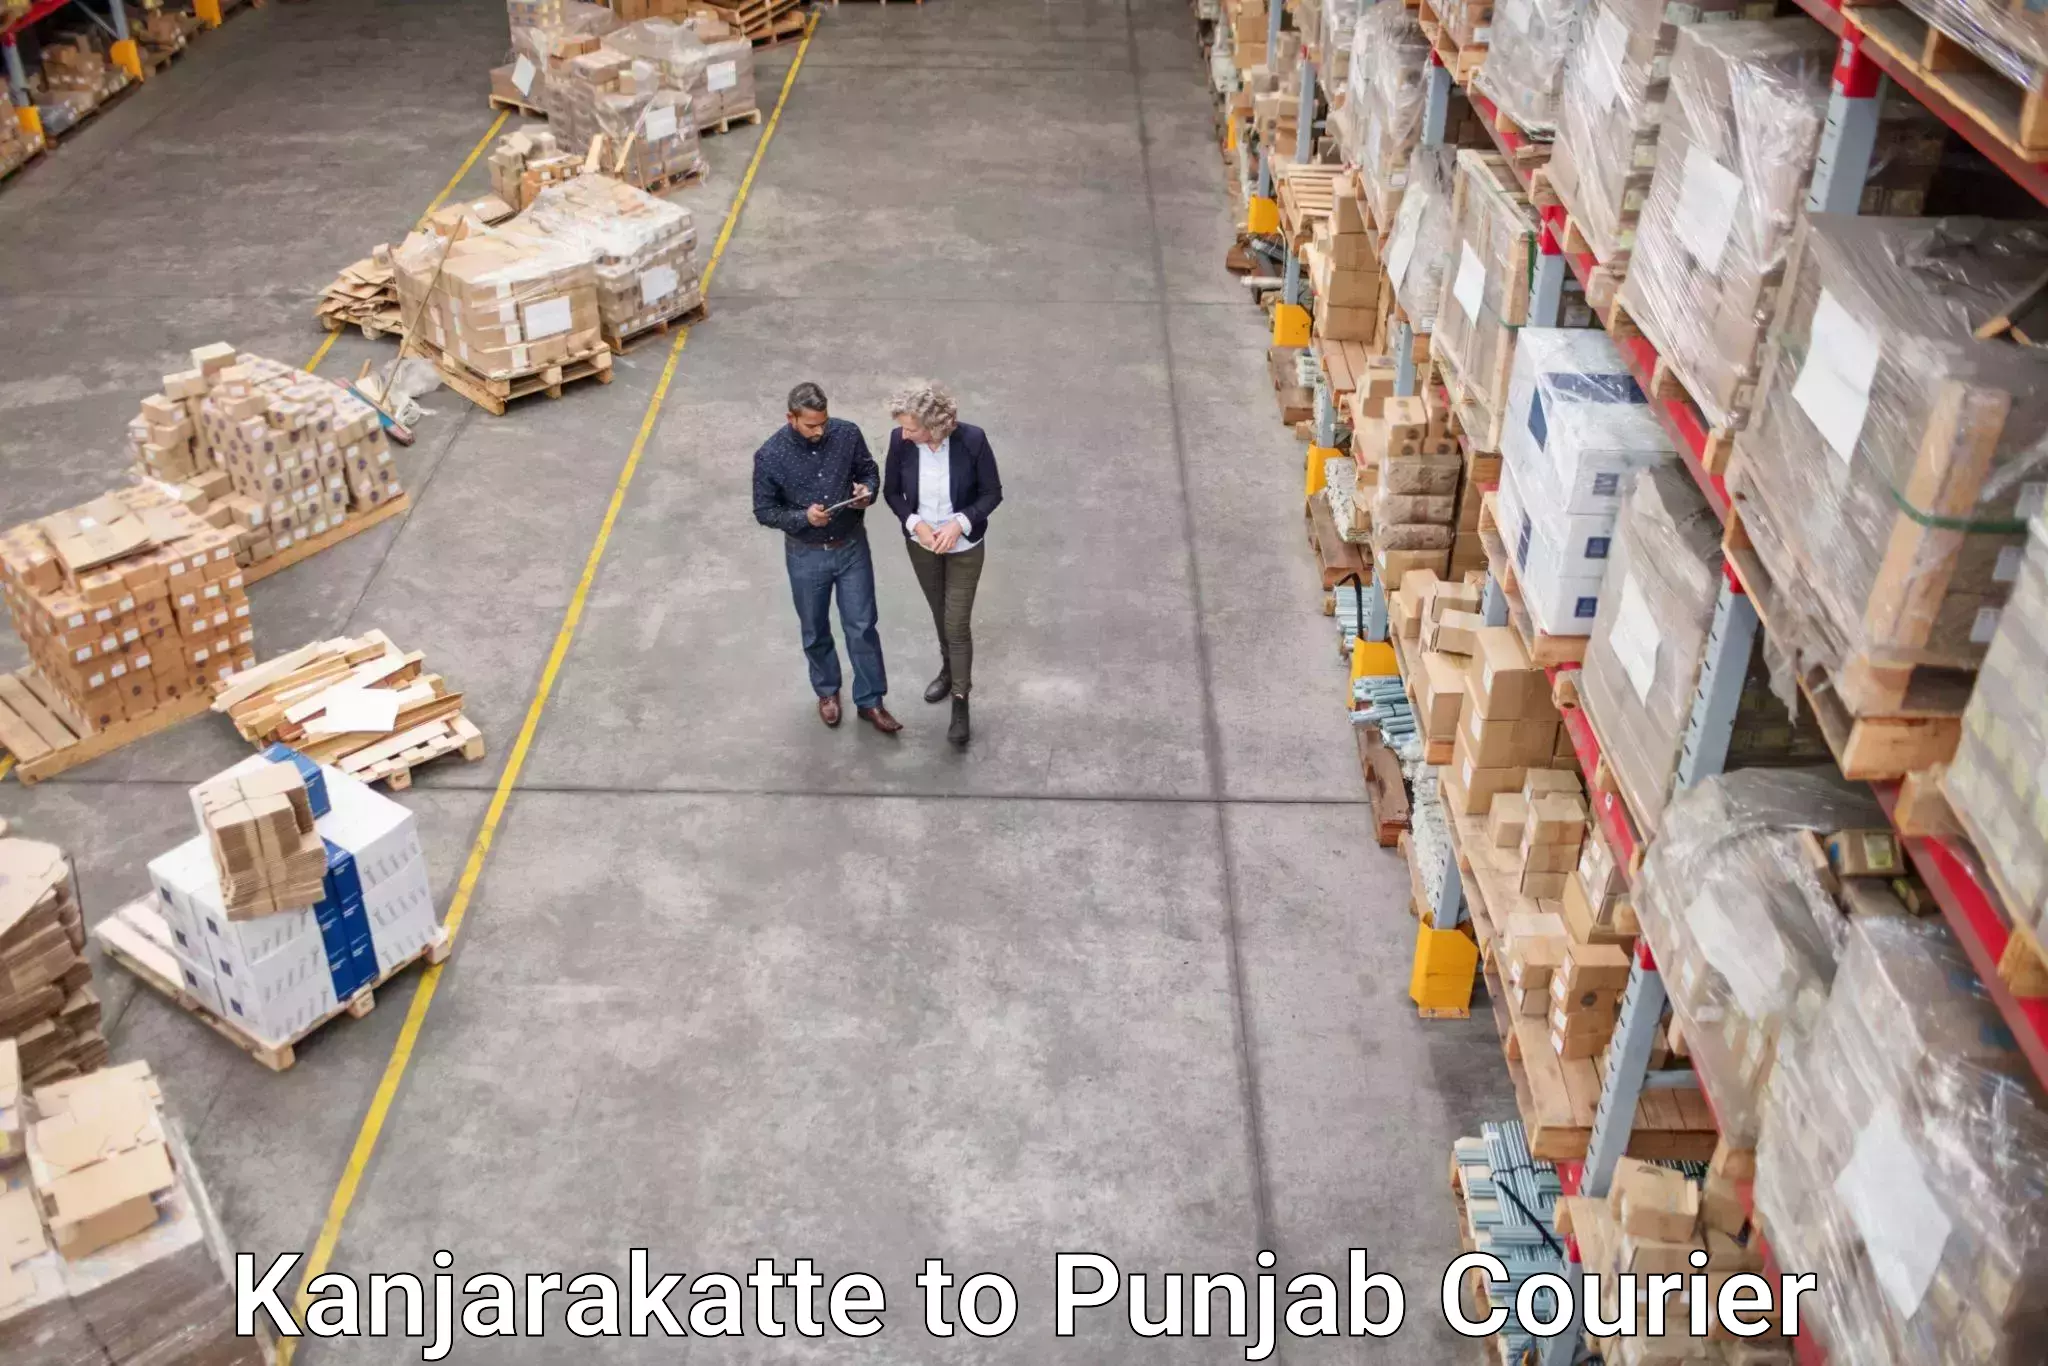 Reliable parcel services Kanjarakatte to Amritsar